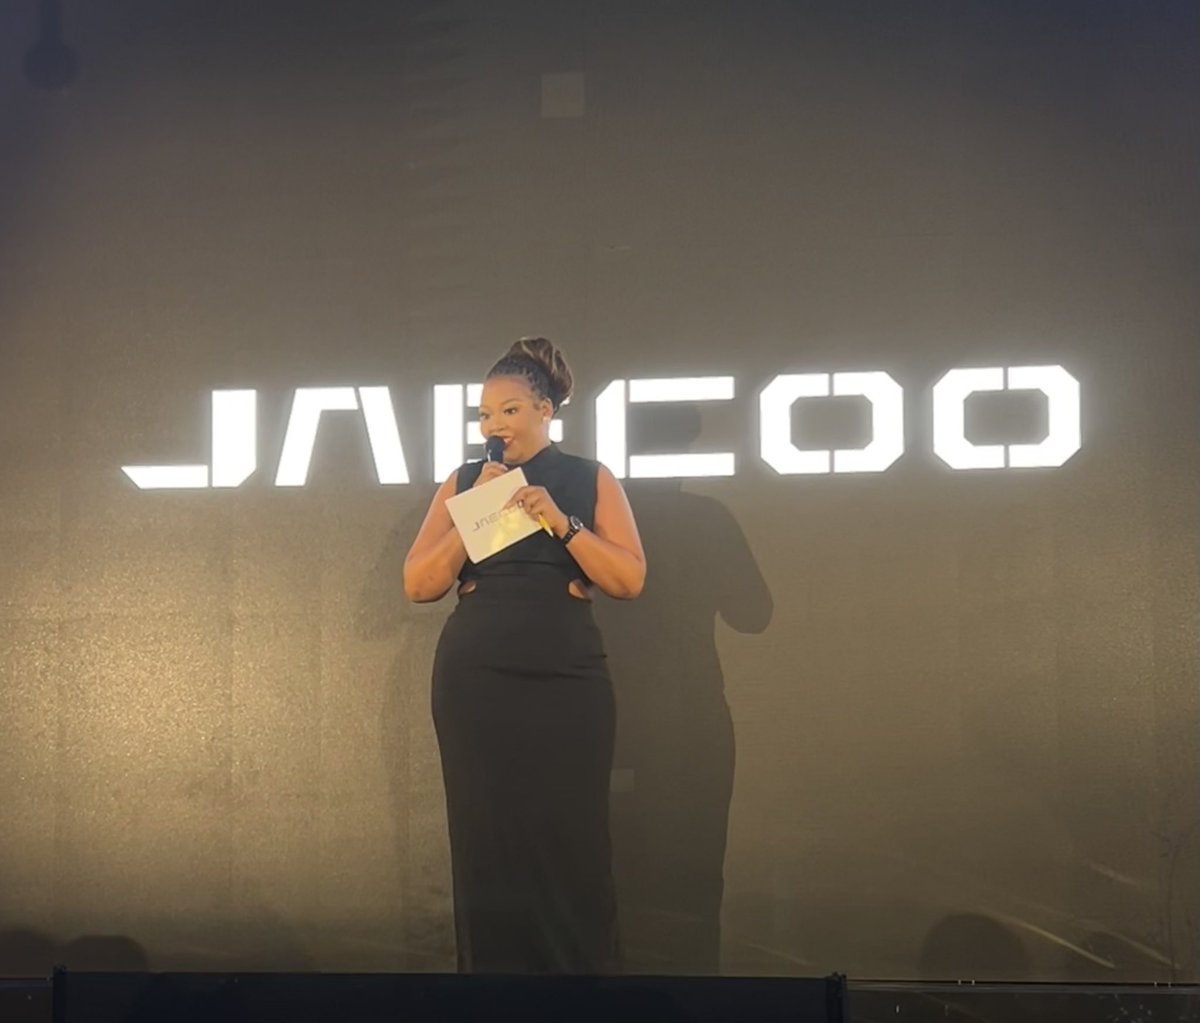 Meet our host for the night @Anele #JAECOOJ7 #JAECOO